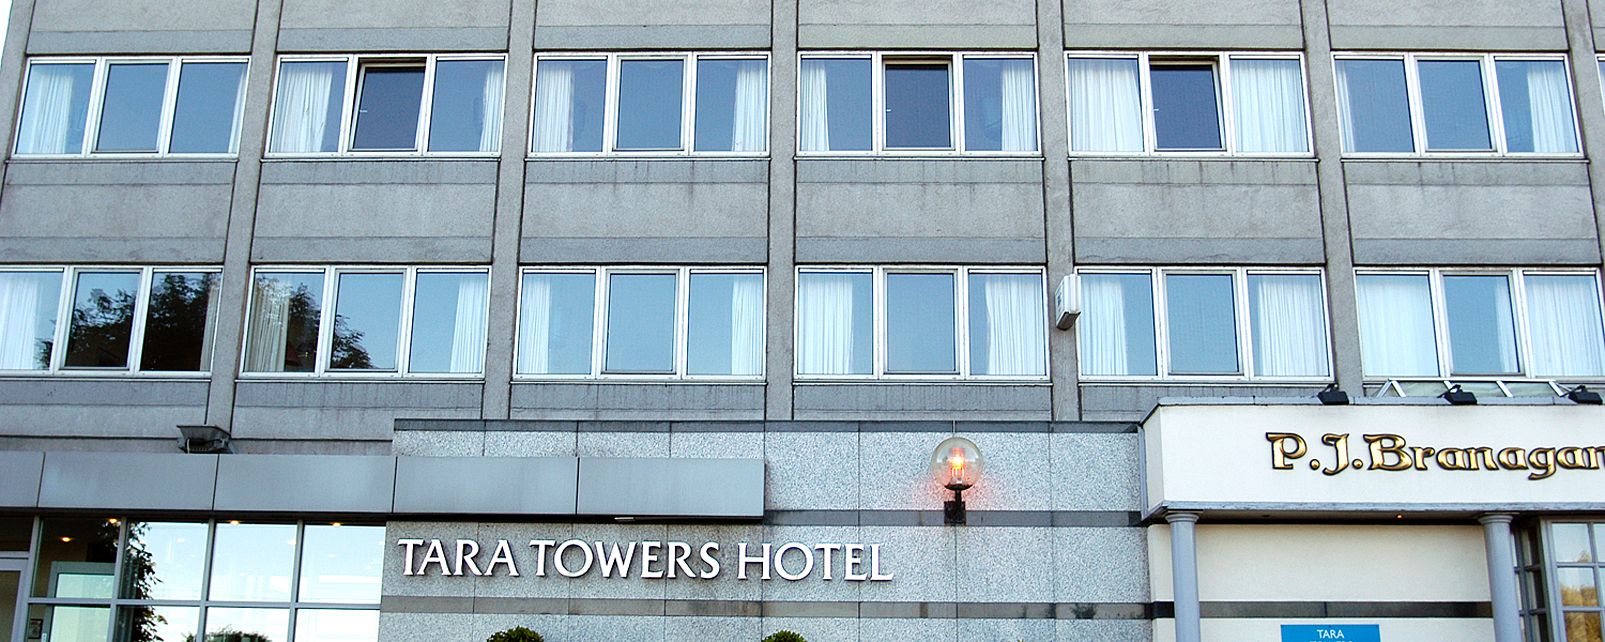 Hotel Tara Towers Hotel